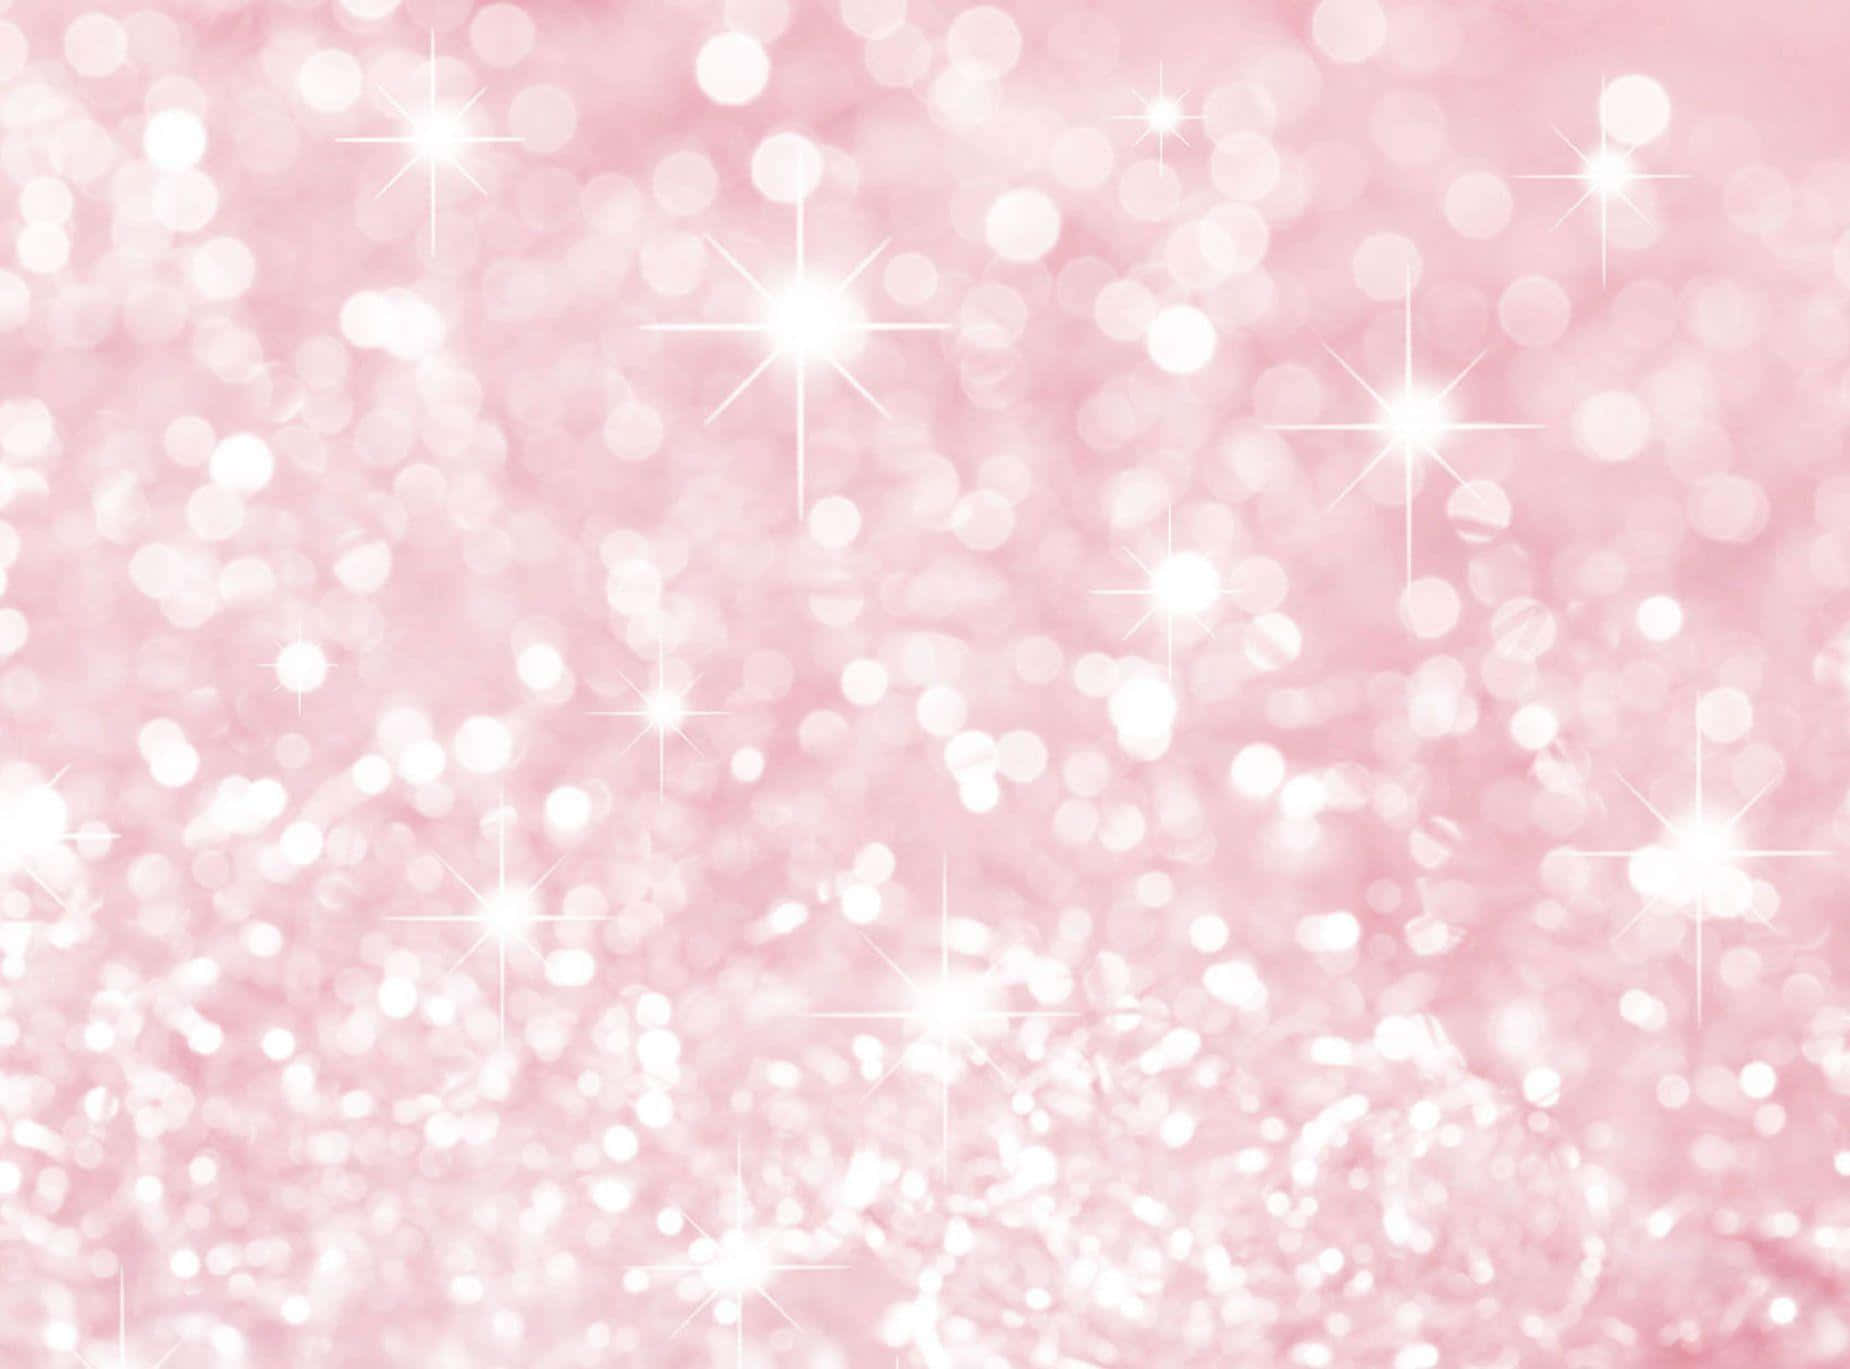 Caption: Glamorous Pink Sparkles Background Wallpaper